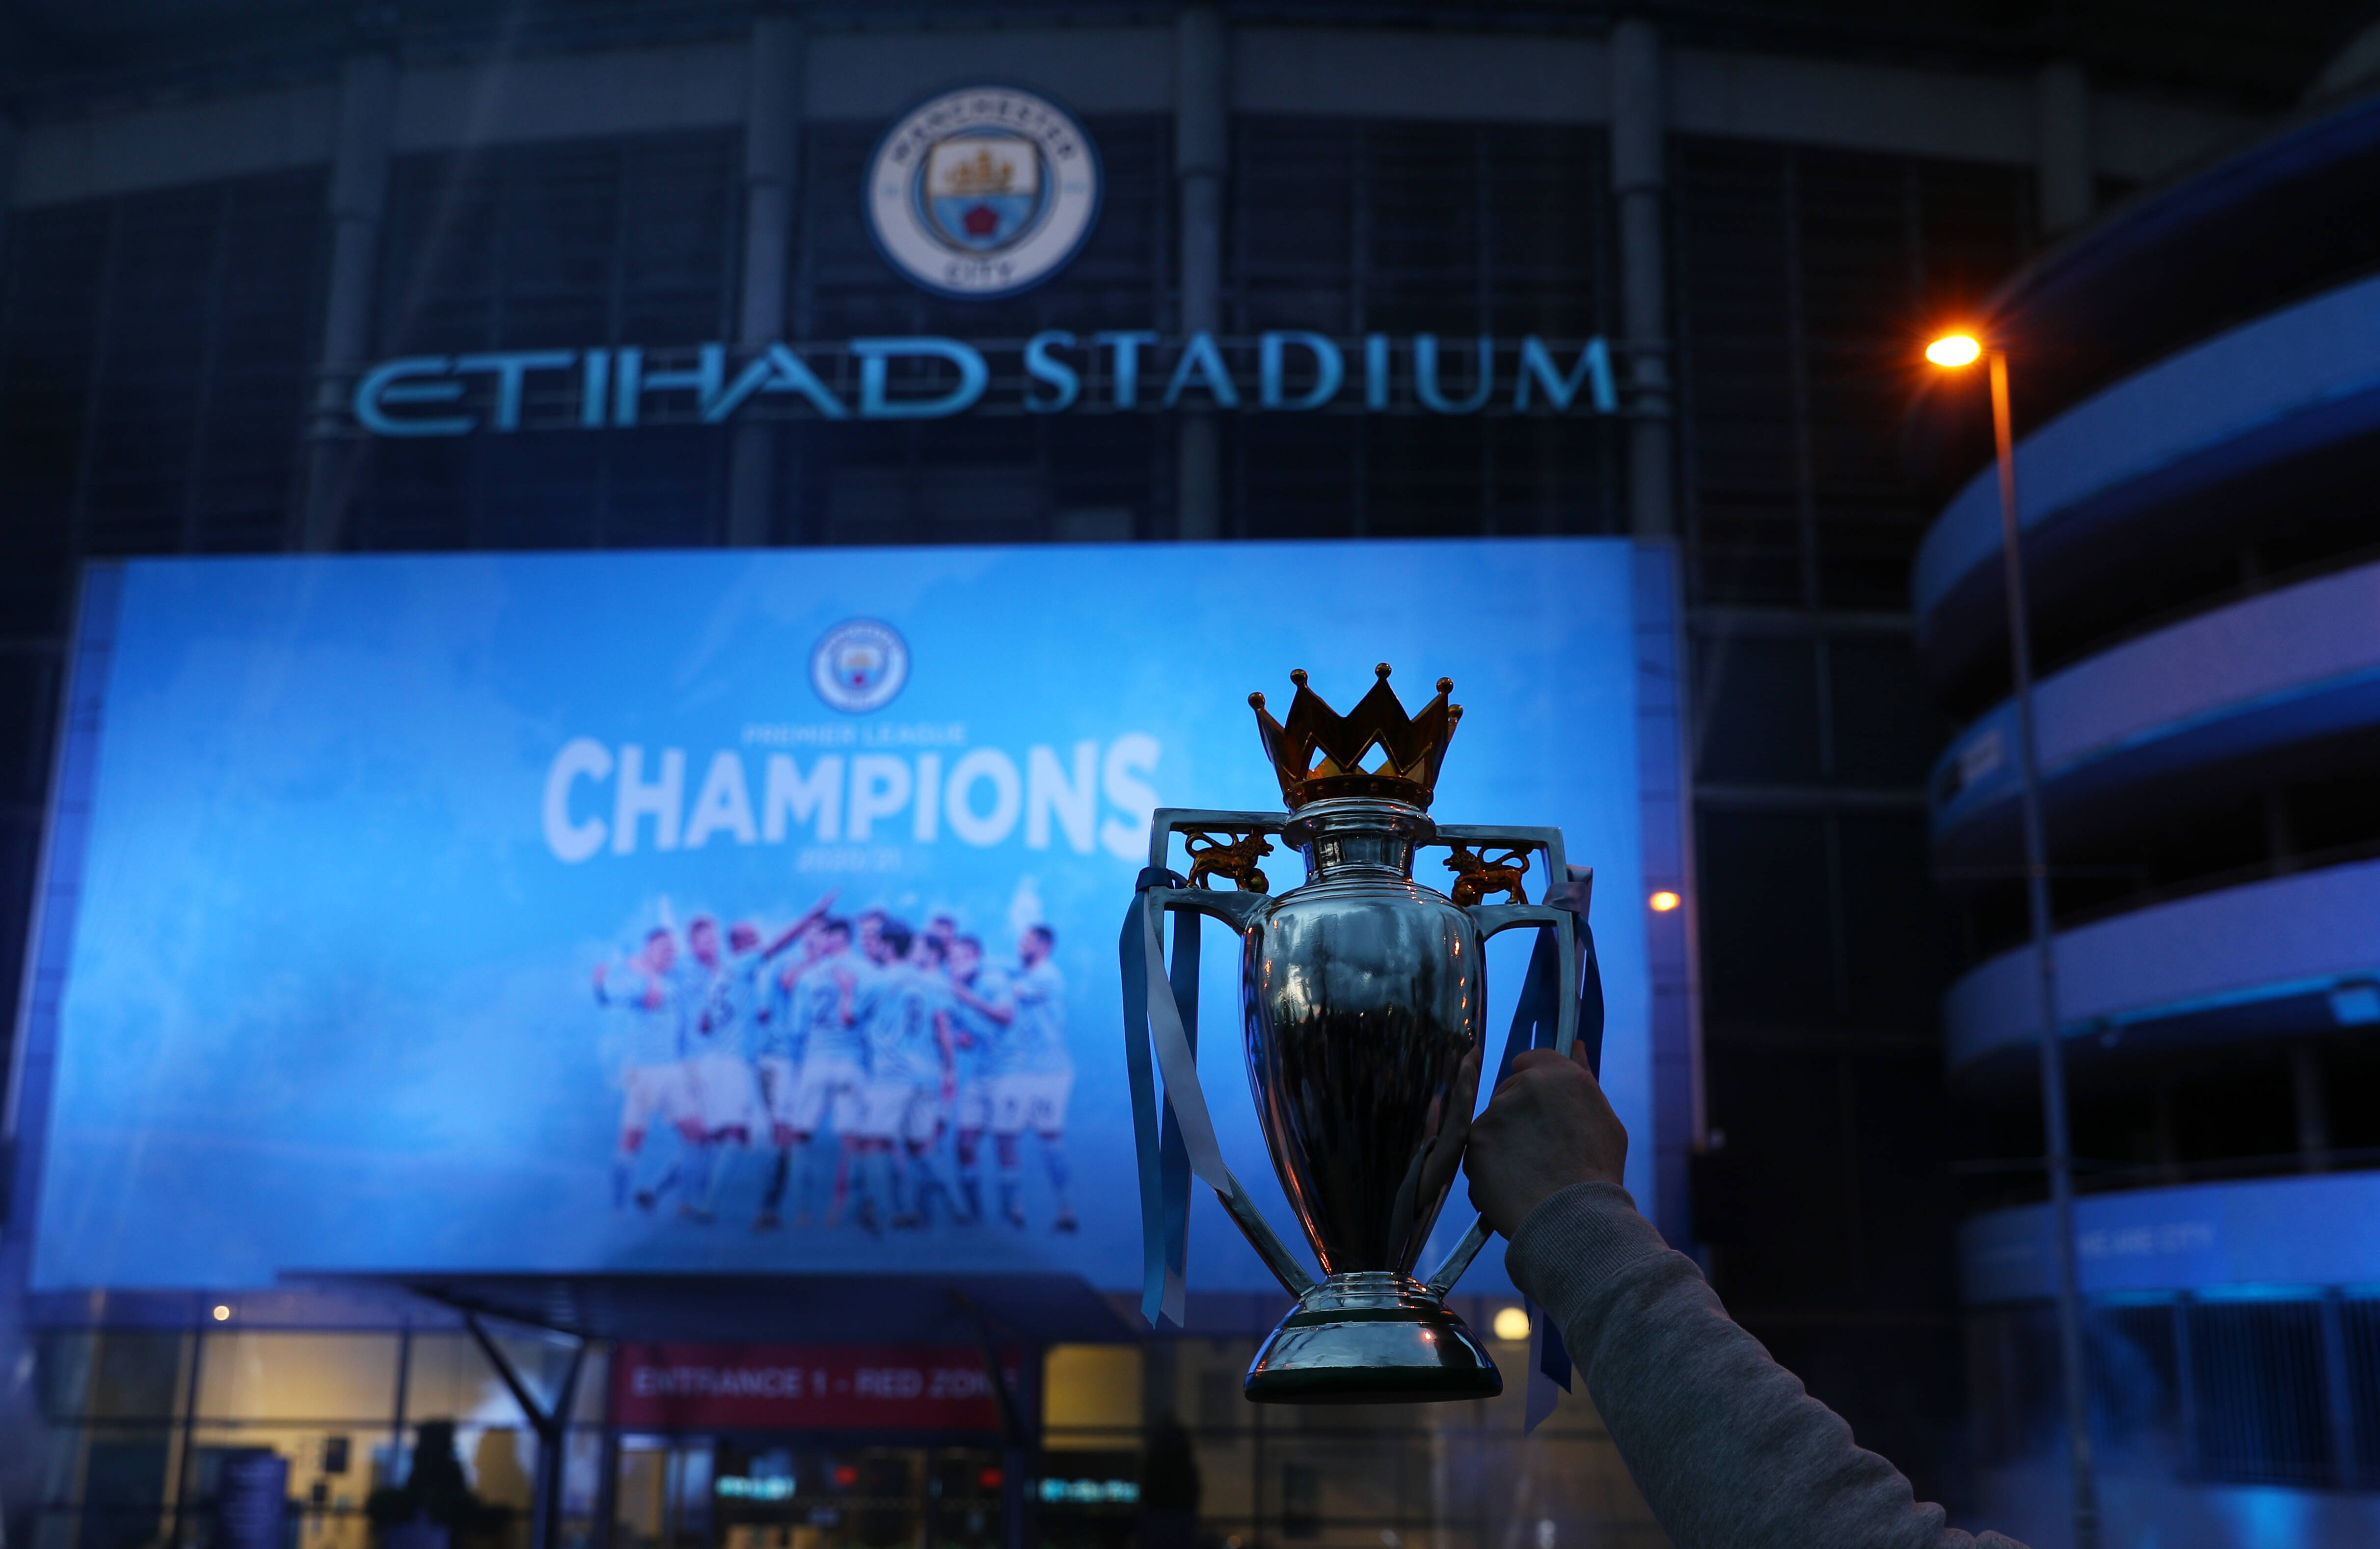 Manchester City Fans Etihad Stadium Manchester City Fans Celebrate At The Etihad Stadium, After Manchester City Were C